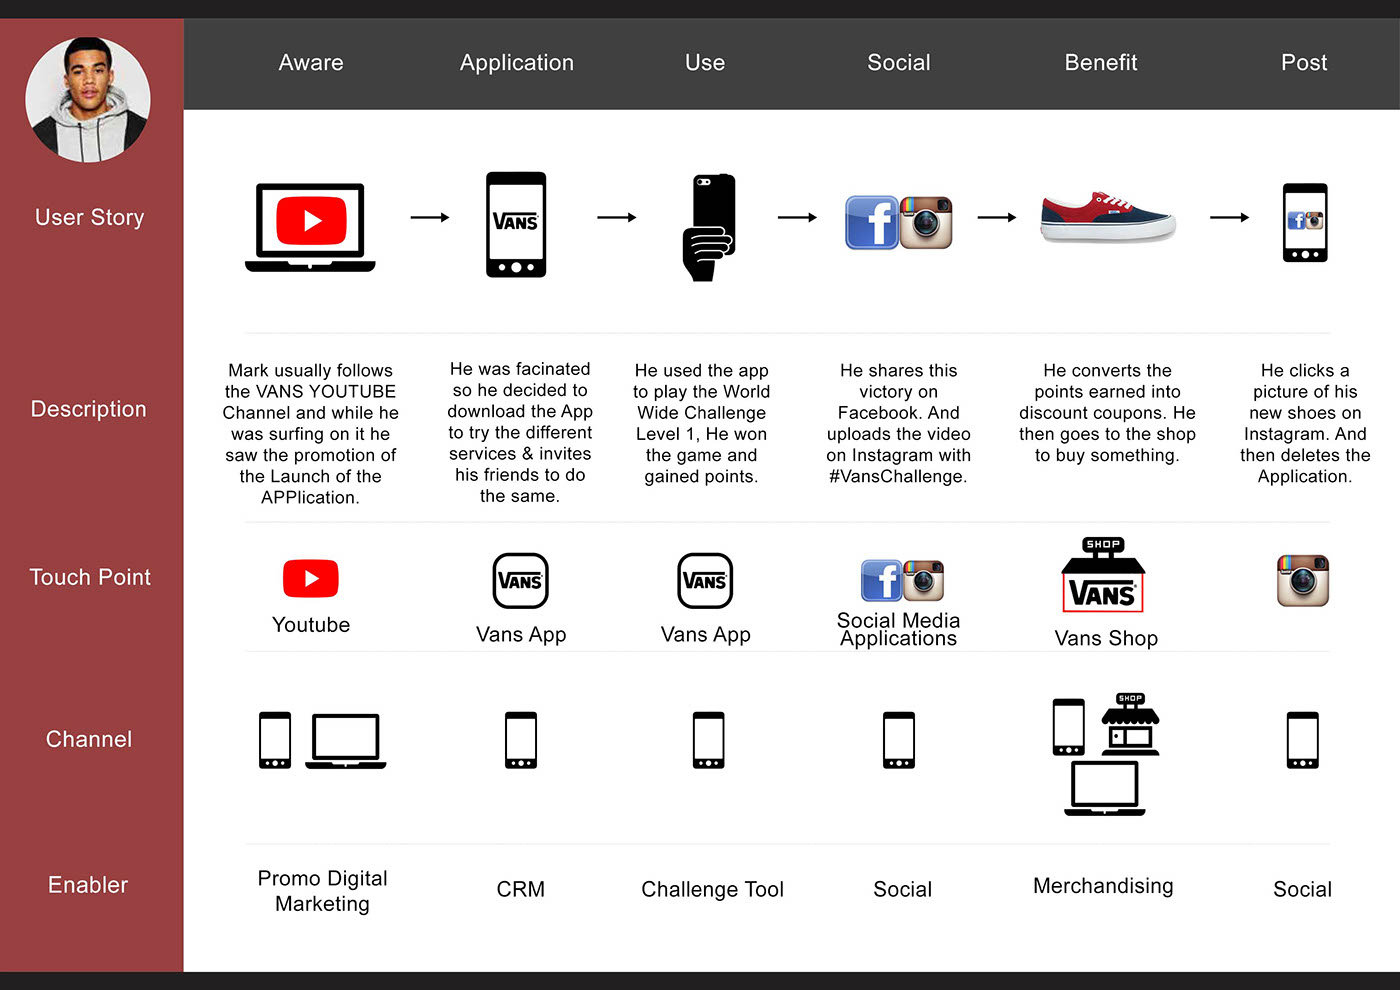 Vans Mobile Application user interface skateboarding network marketing Brand Loyalty